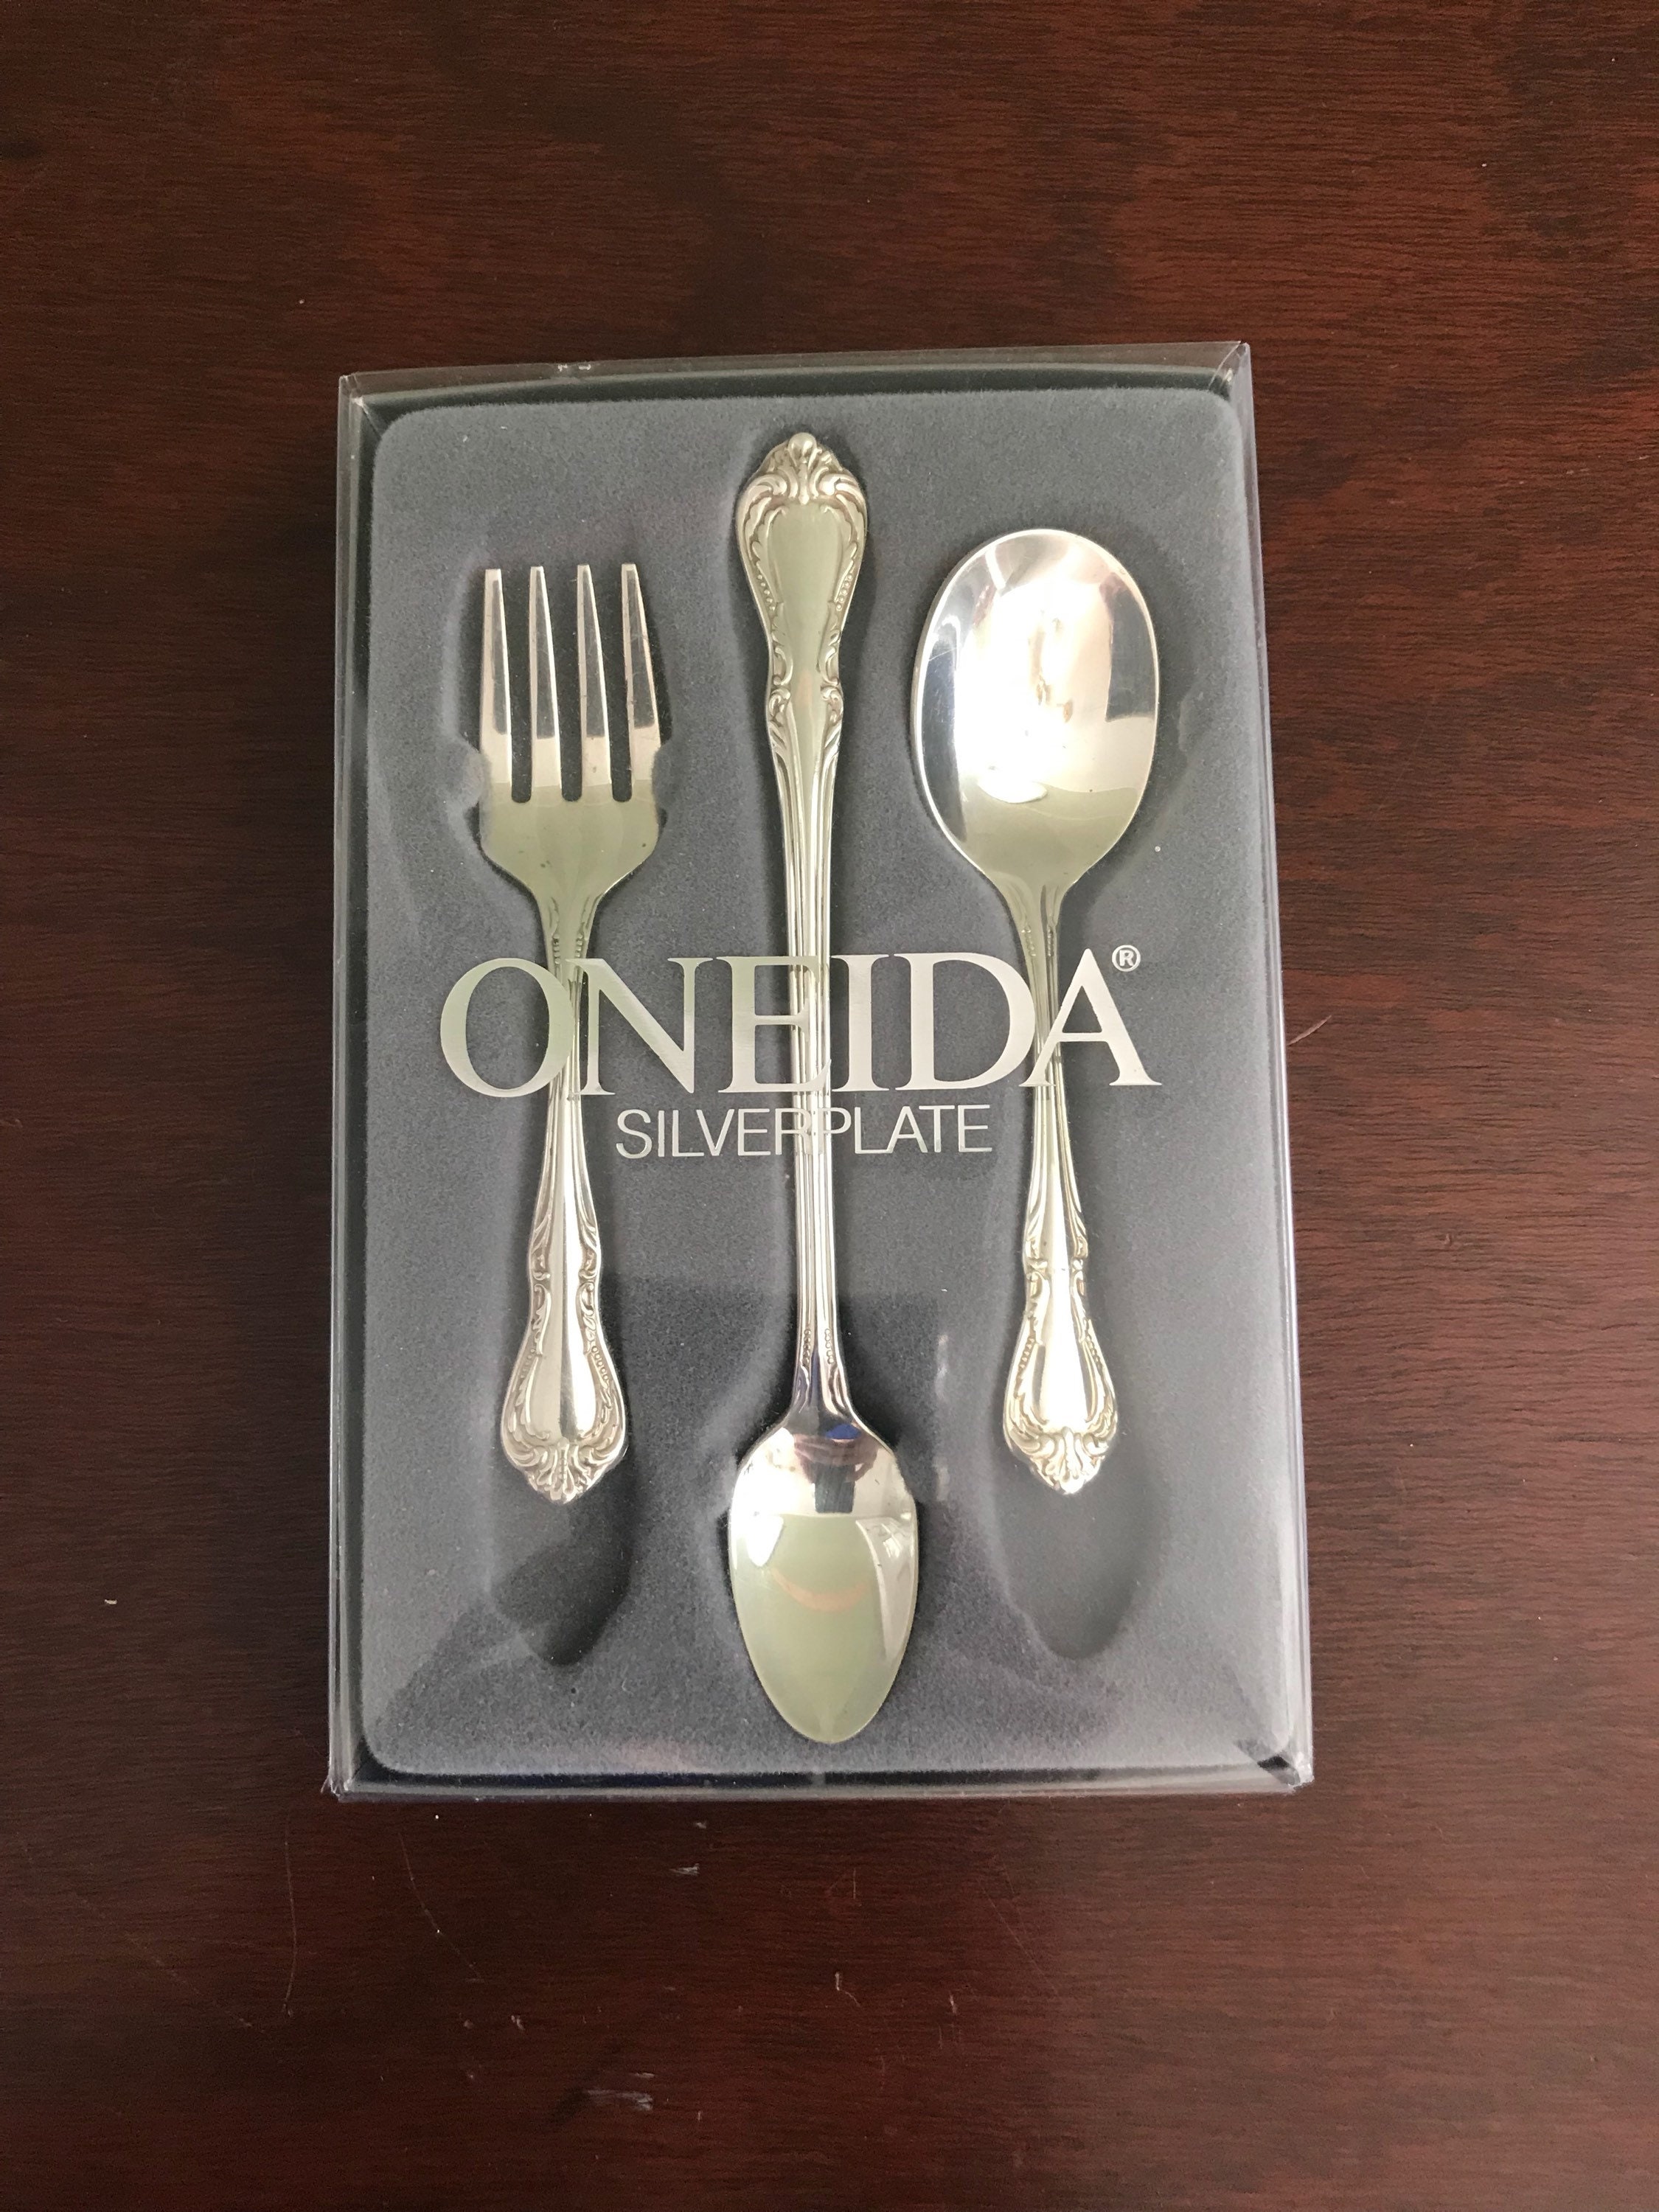 Oneida Community Baby silverware set, ONEIDA Chalice Silverware,  Silverplated Baby flatware, 3 pc baby utensils, shower gift, silver spoon